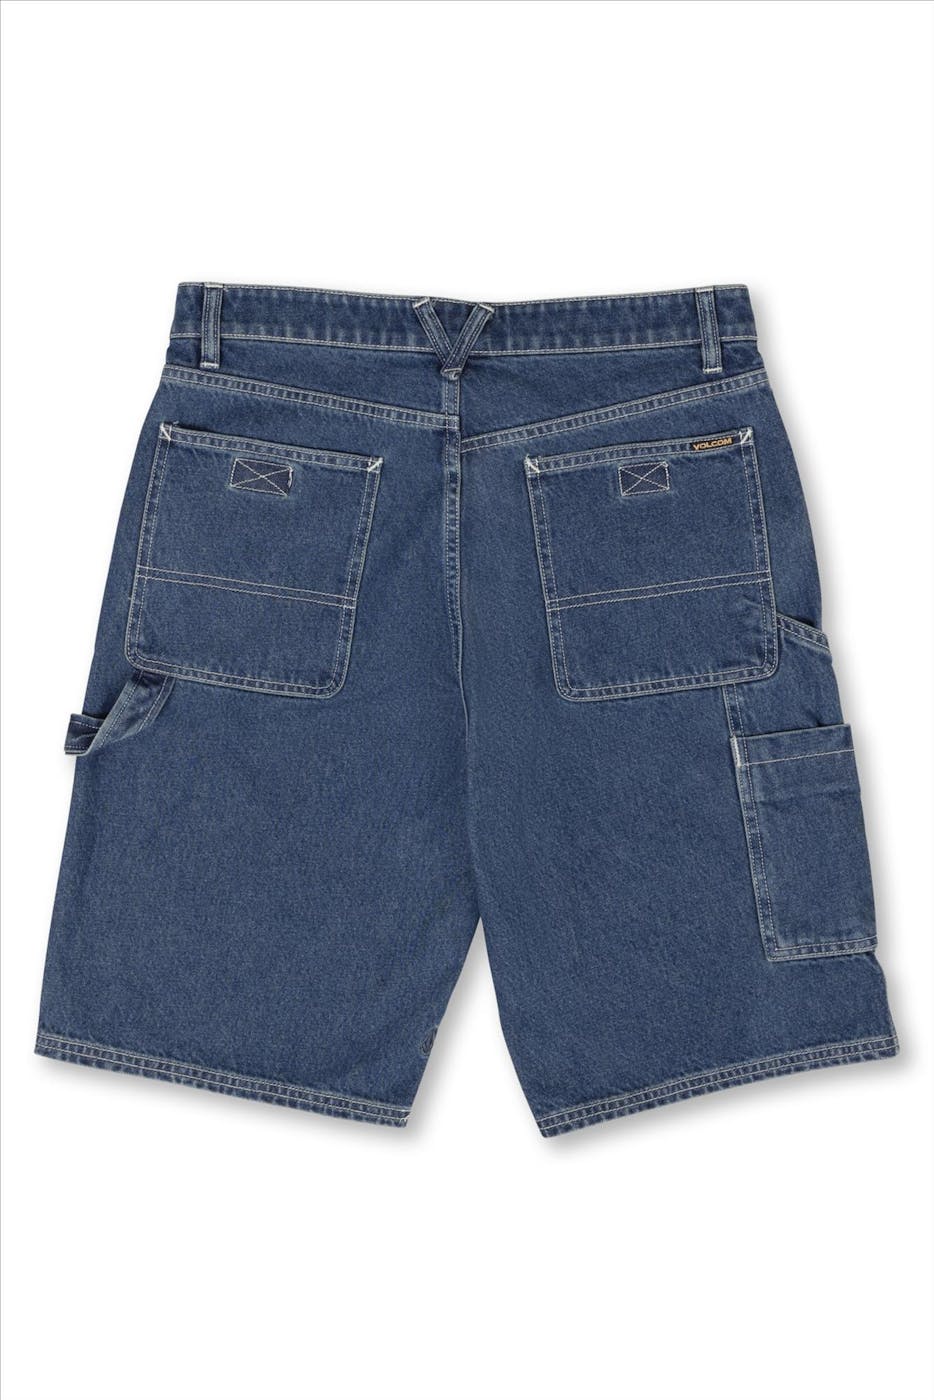 Volcom - Donkerblauwe Utility jeansshort